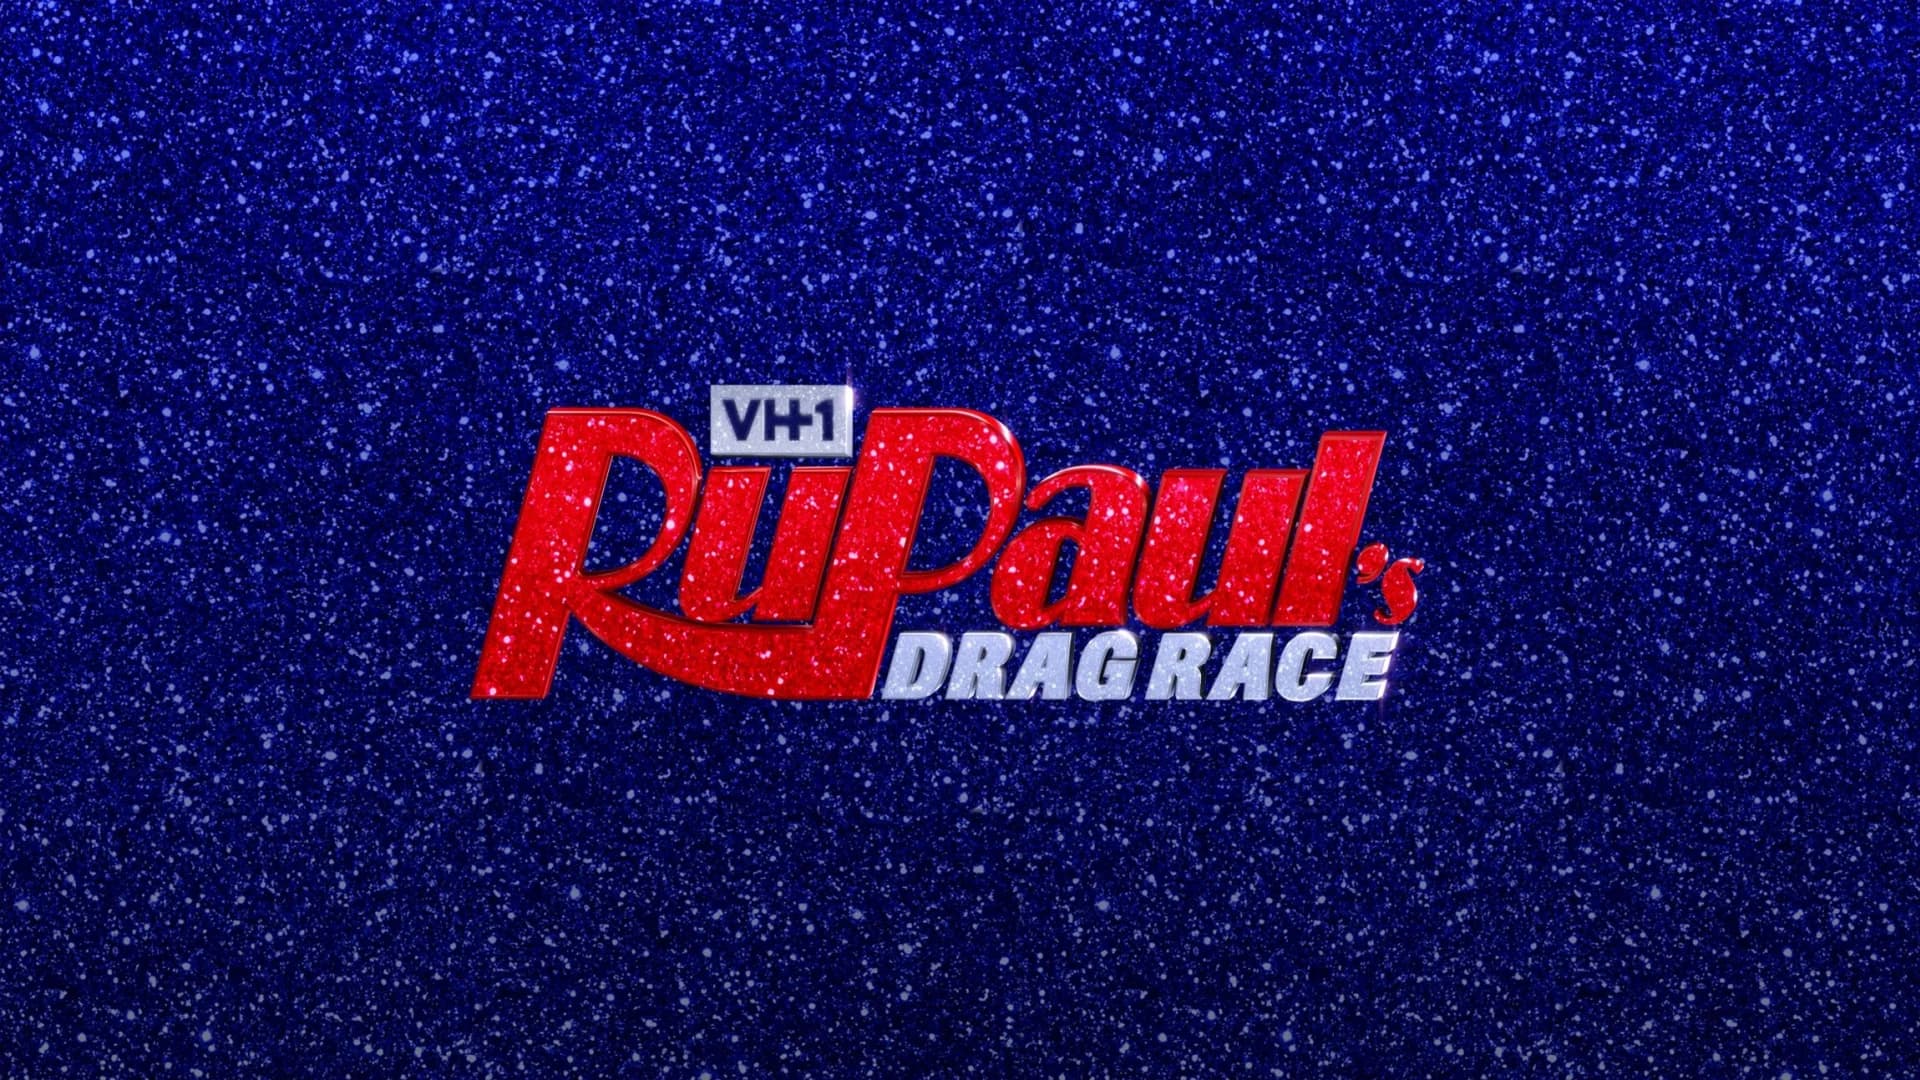 NYC drag queens shantay onto 'RuPaul’s Drag Race' Season 12